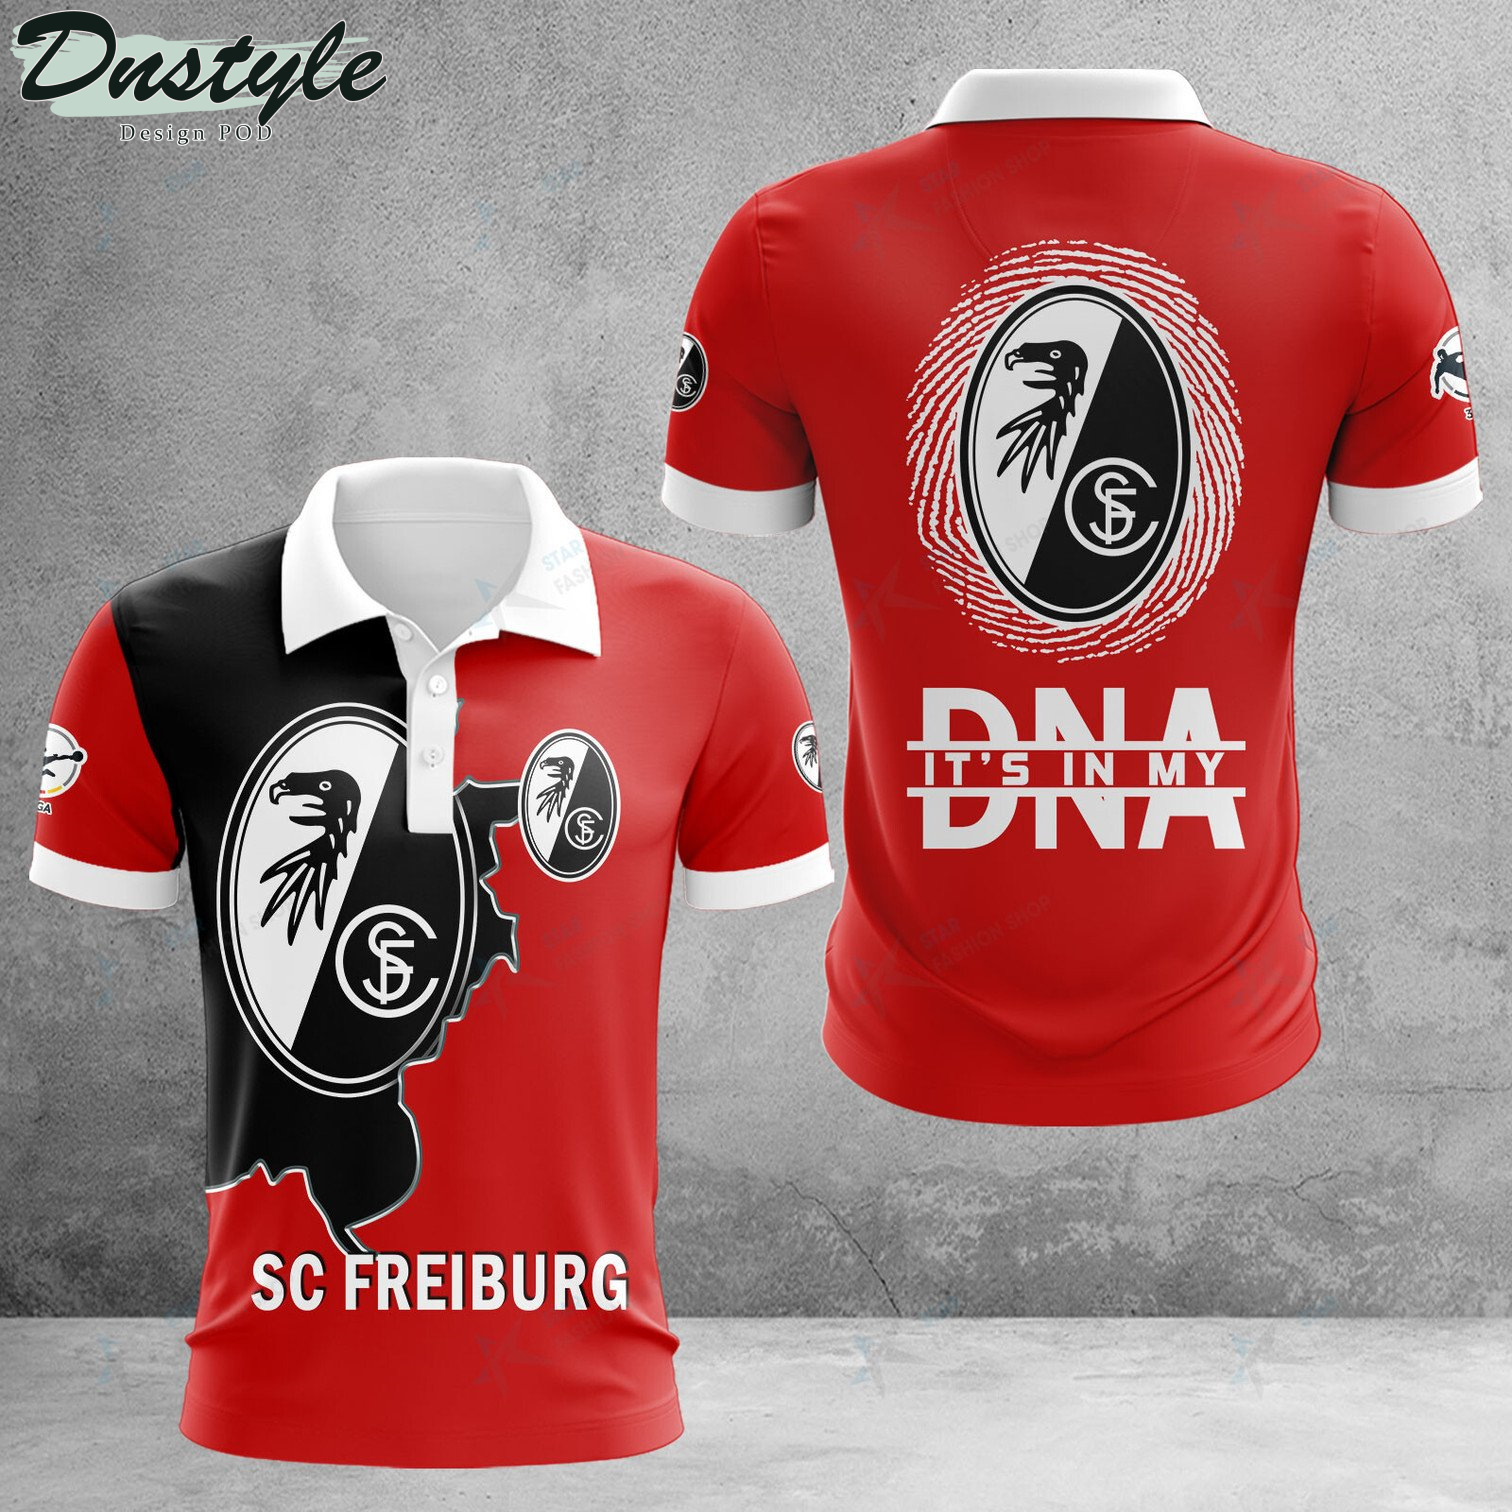 SC Freiburg II it’s in my DNA polo shirt